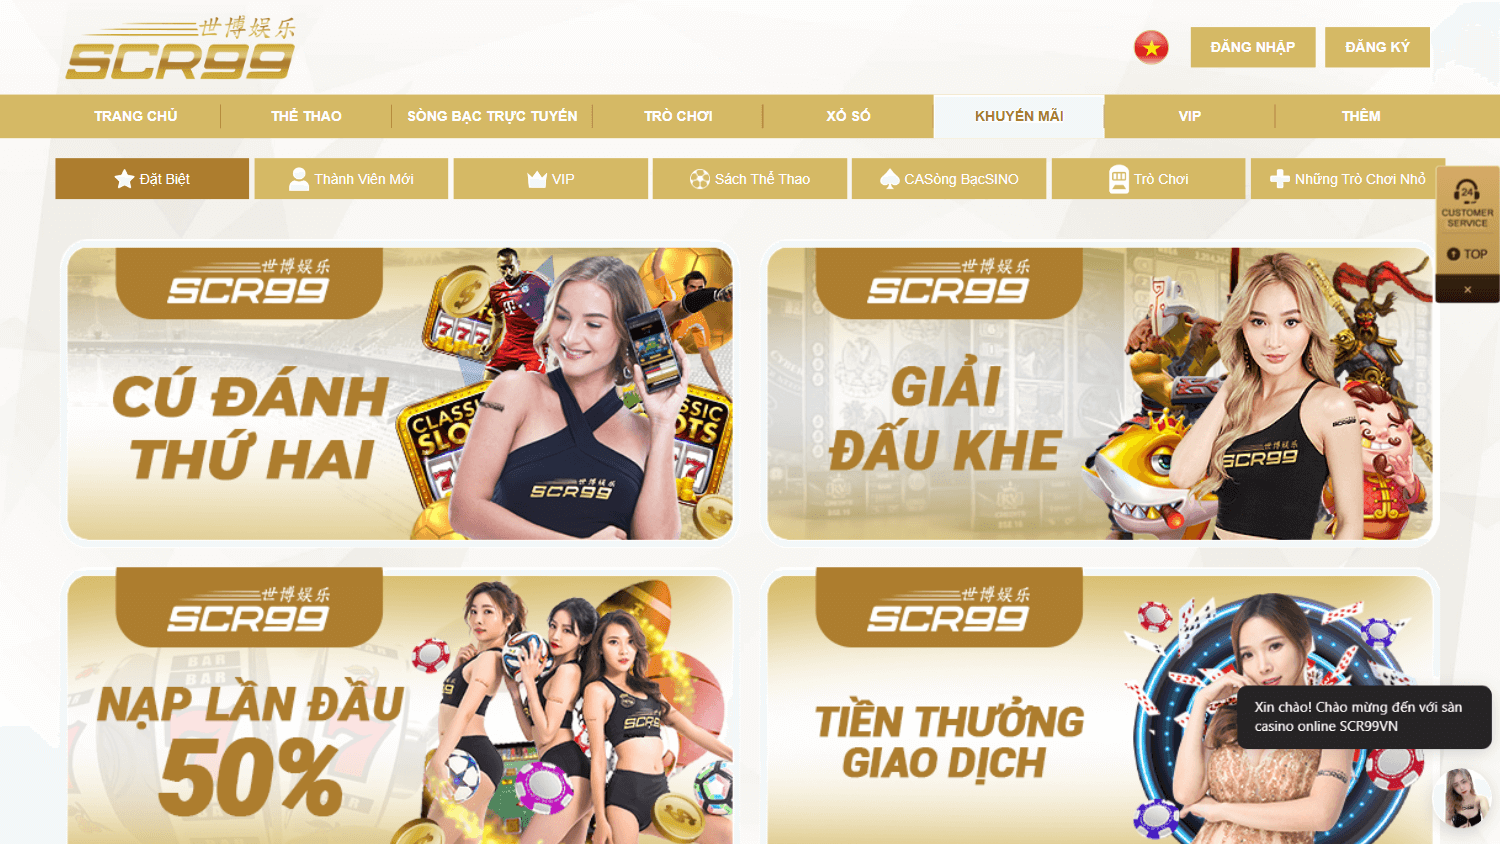 scr99_casino_vn_promotions_desktop